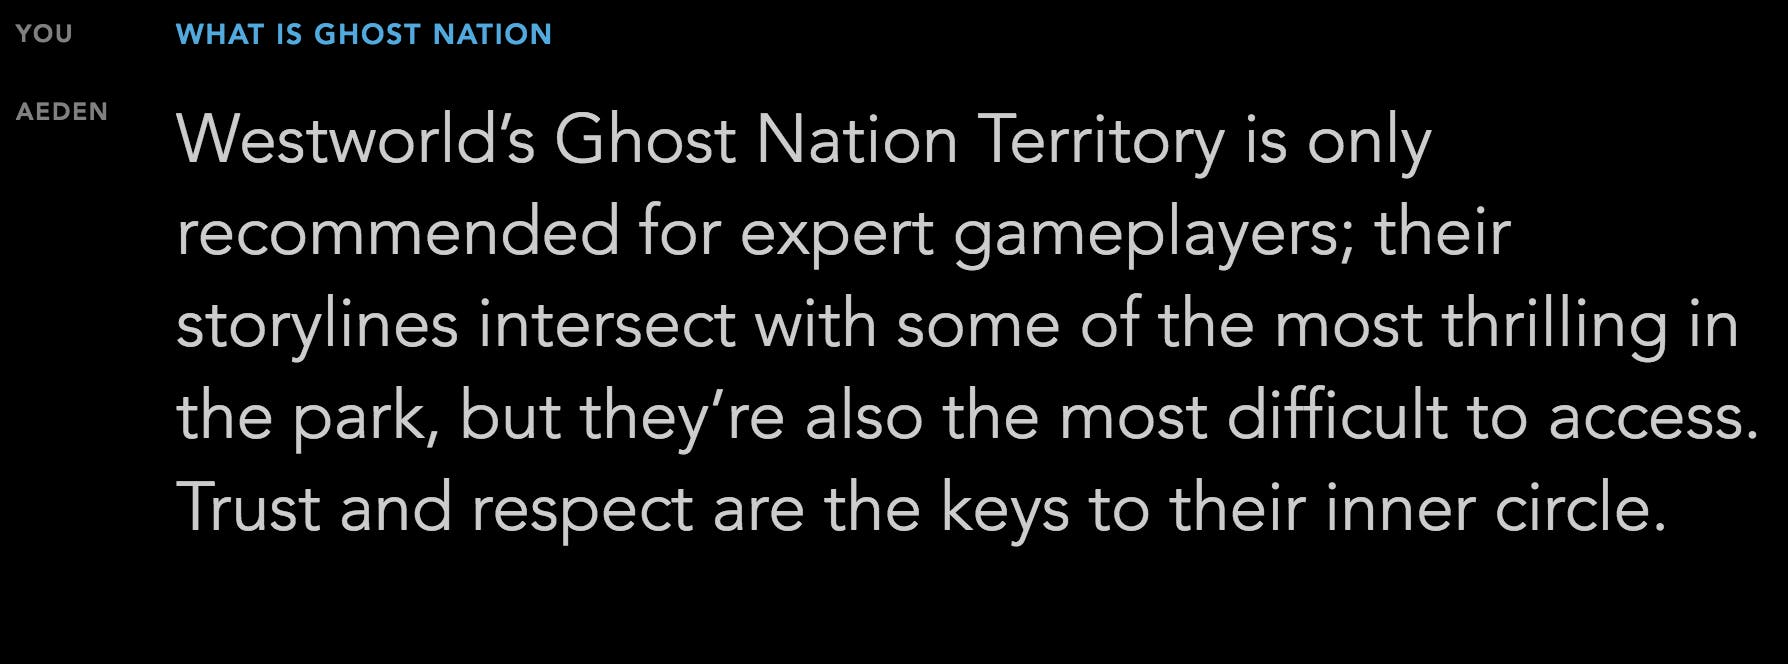 westworld ghost nation